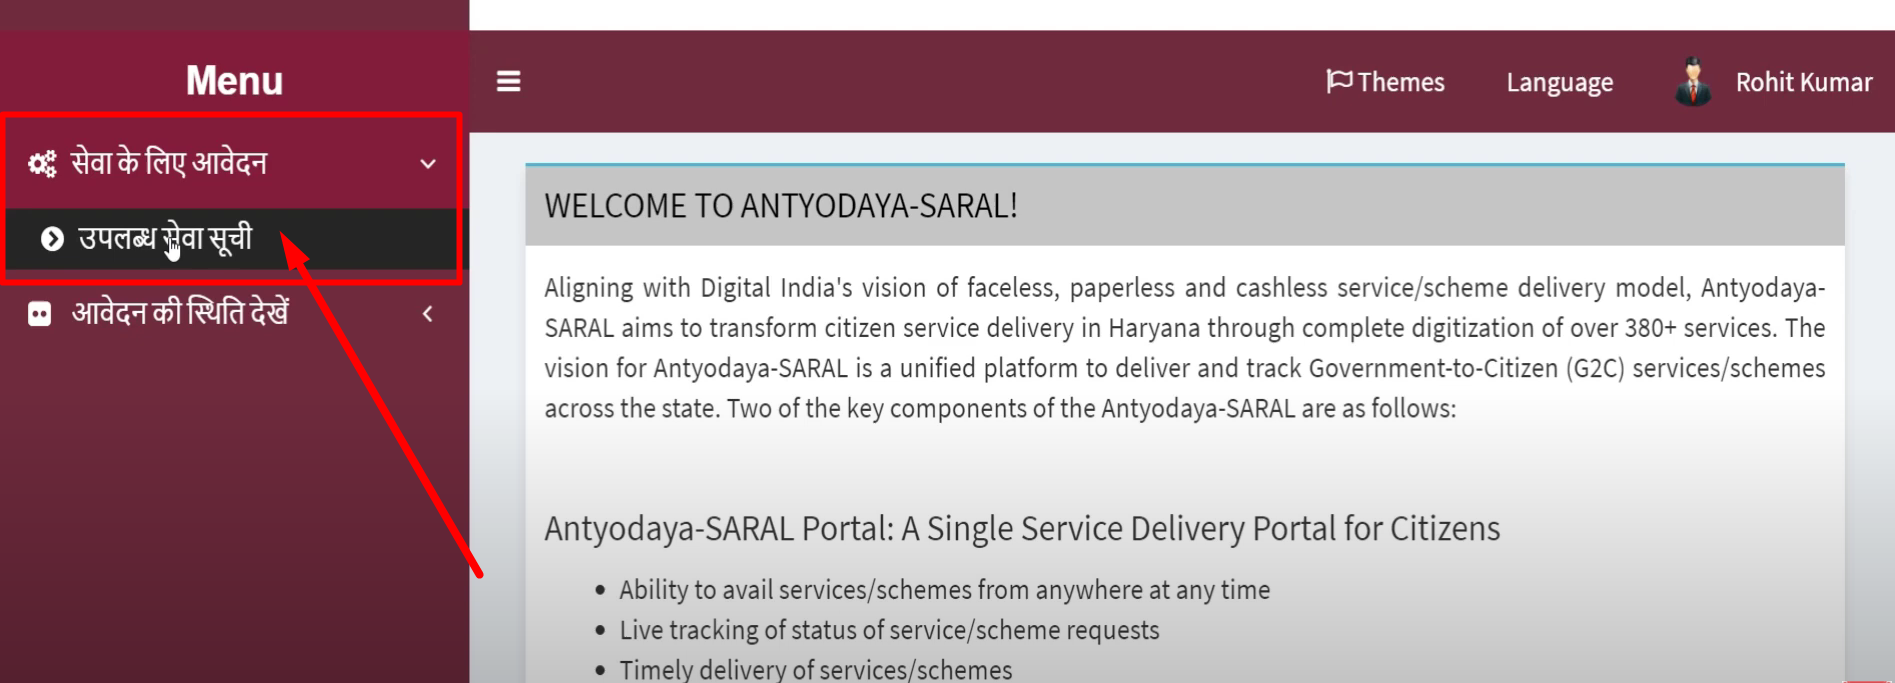 saral haryaana web portal login profile click uplabdhtaa suchee link